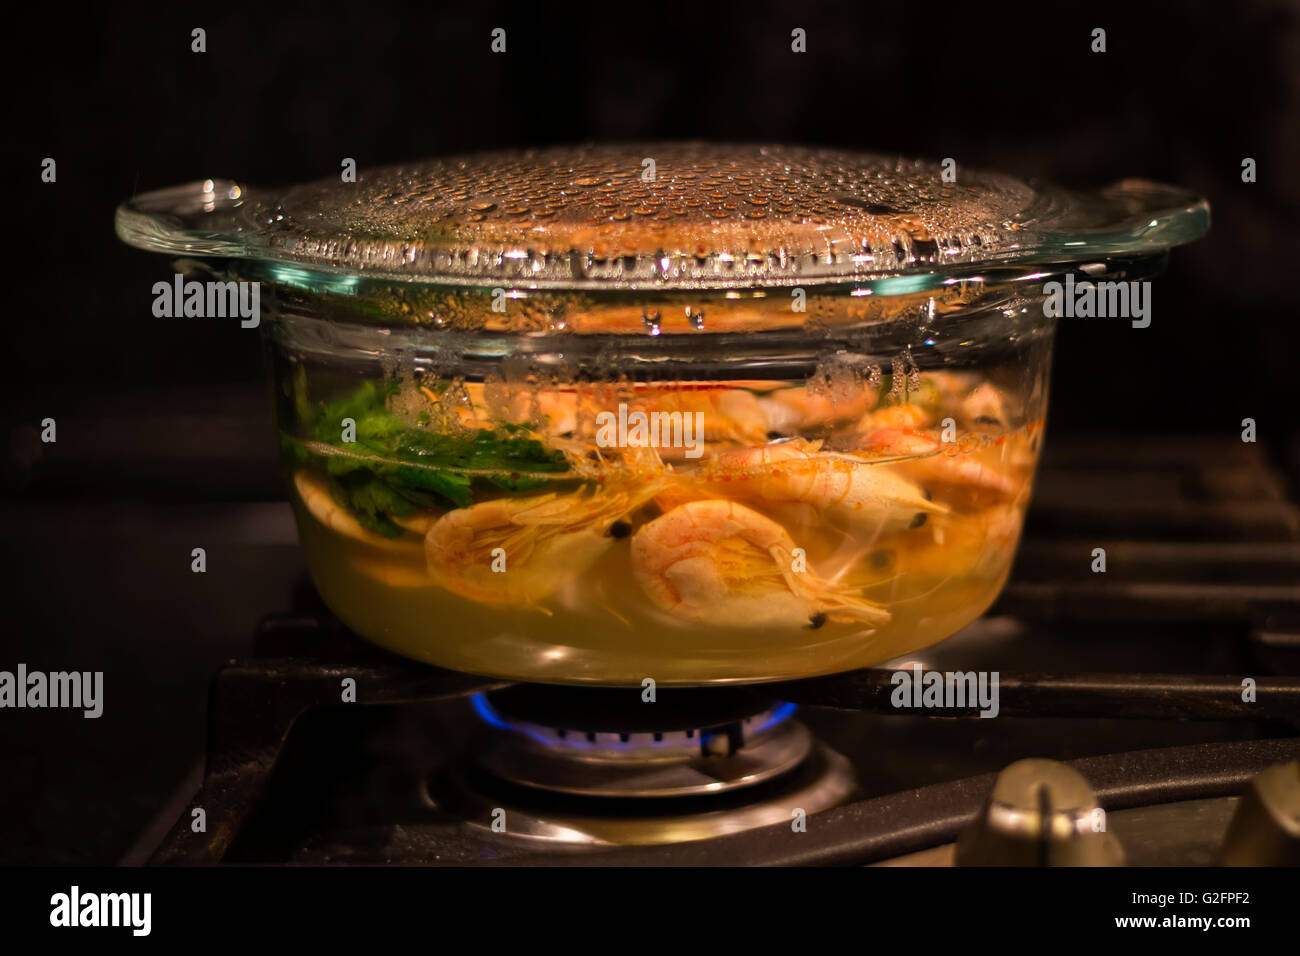 cooking shrimps in transparent glass pot Stock Photo